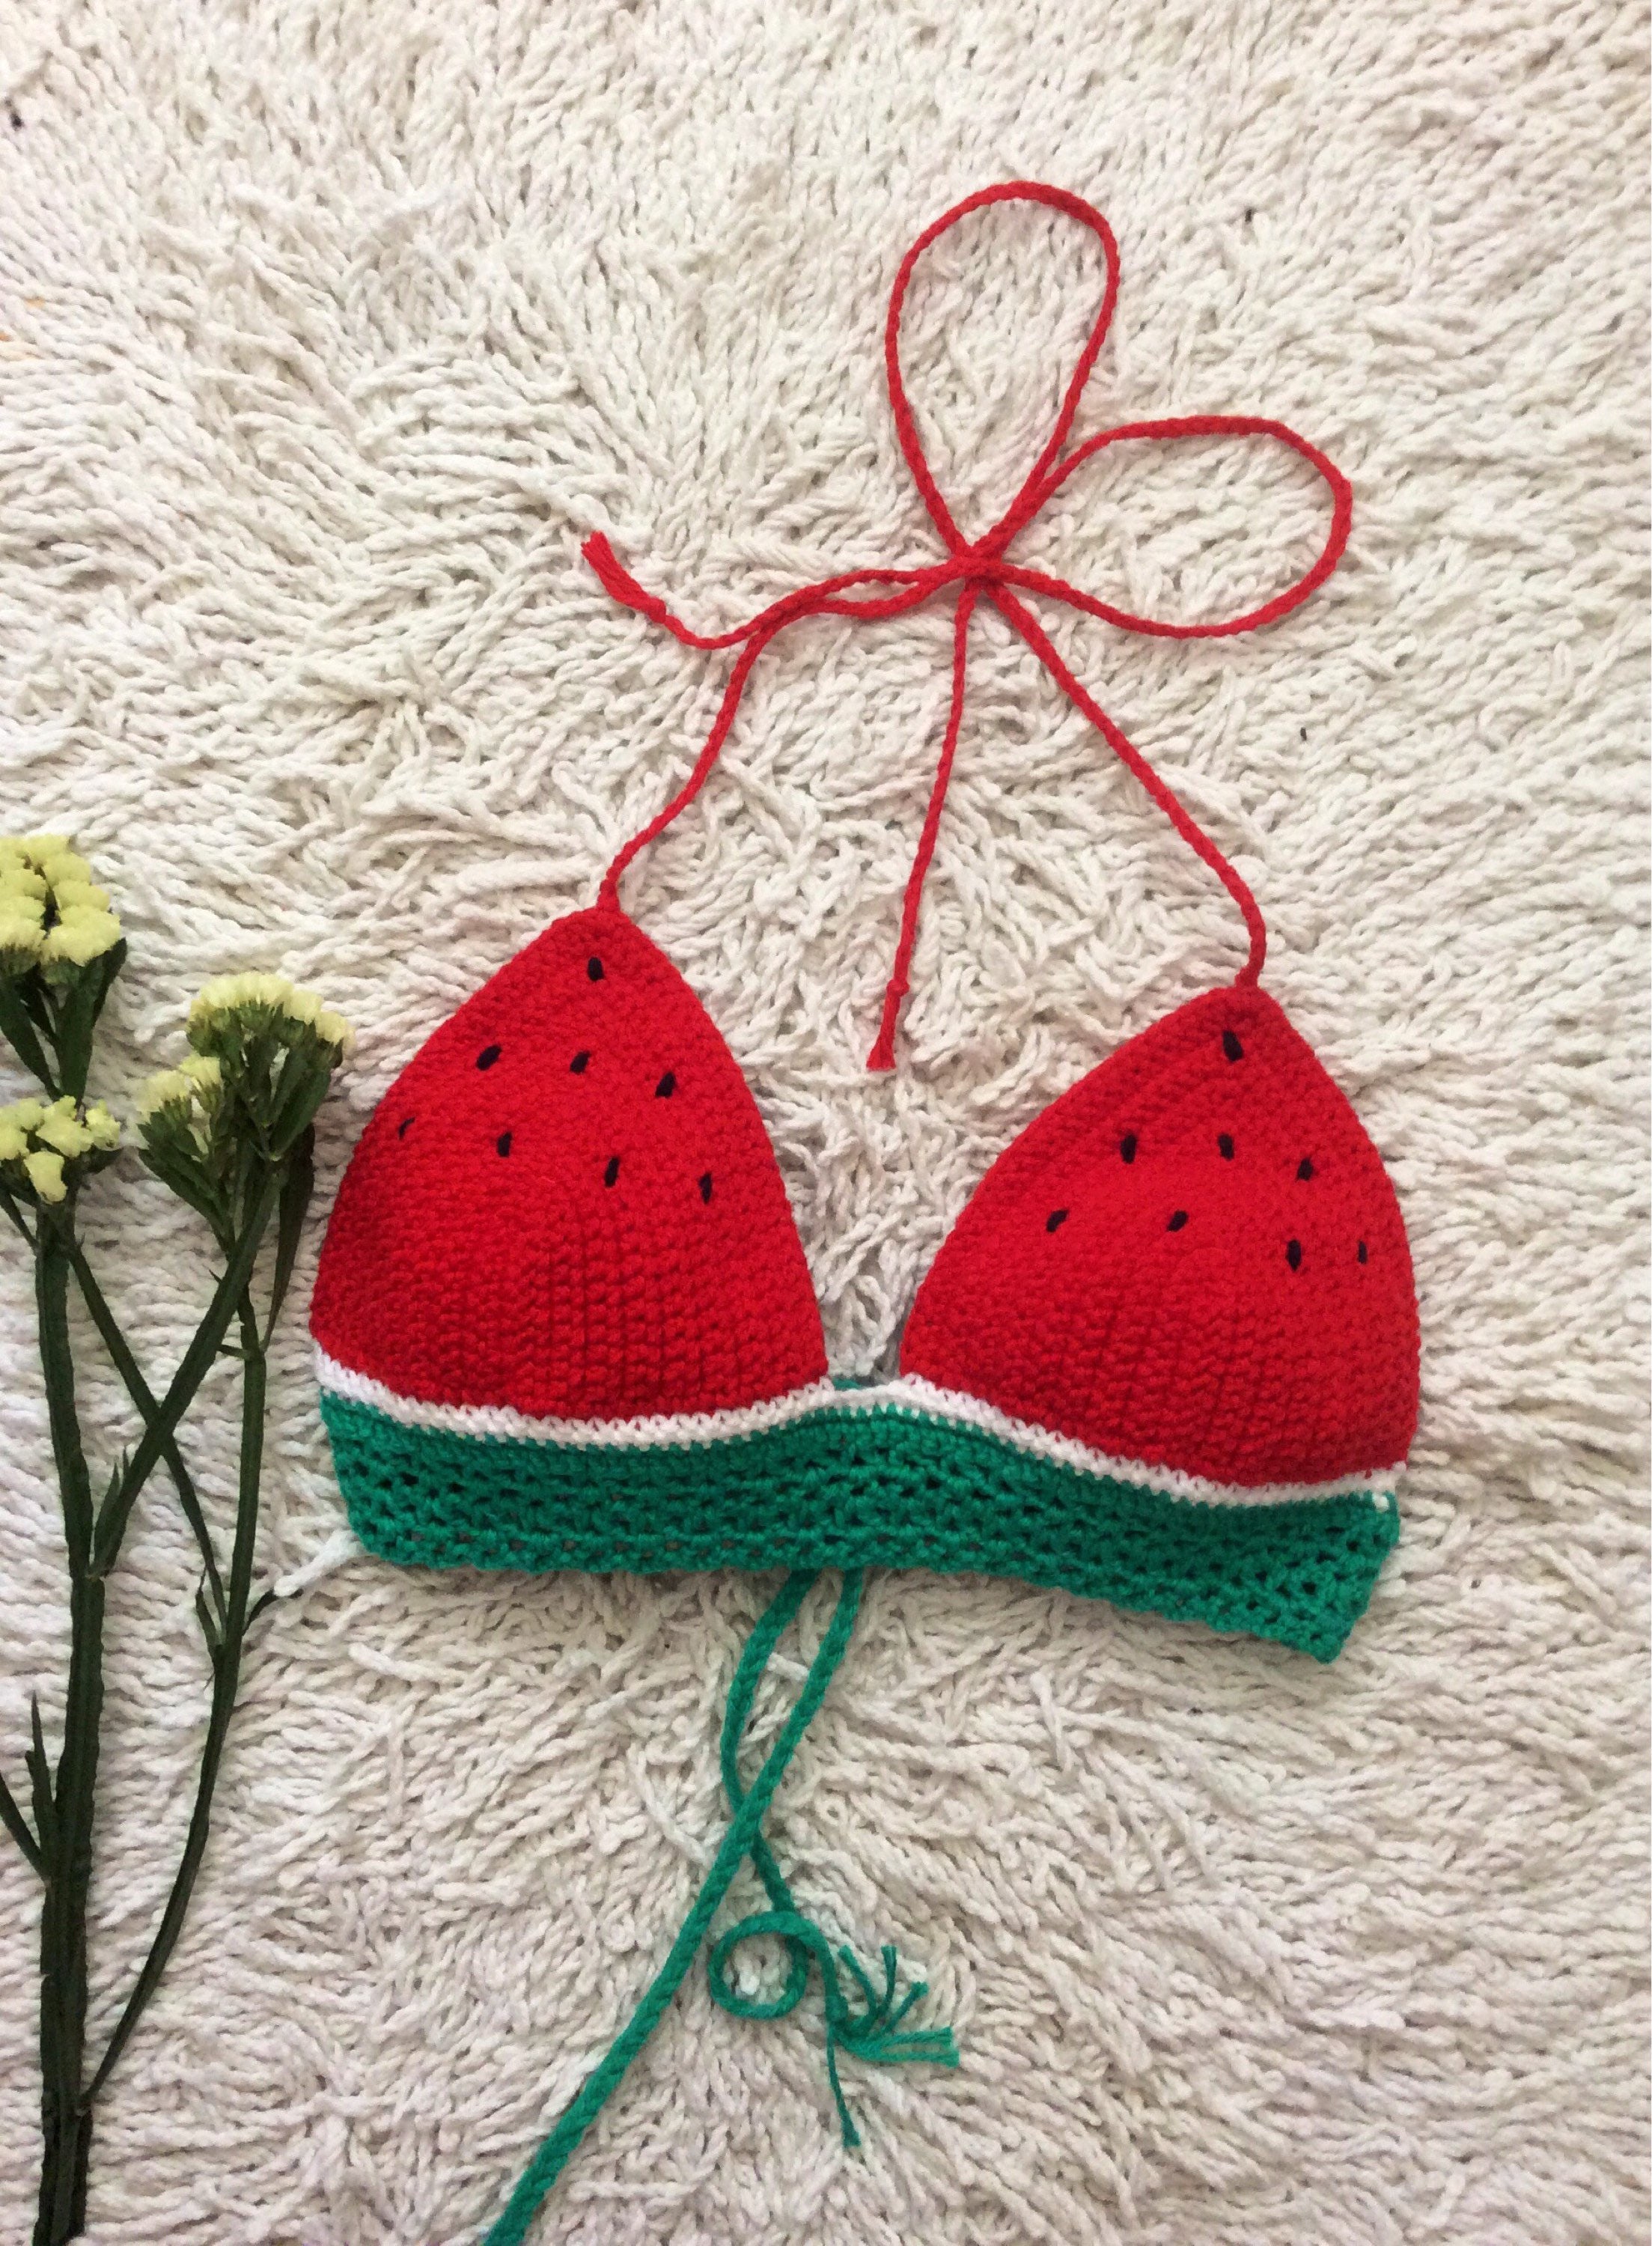 festival/rave watermelon cotton crochet bra crop top